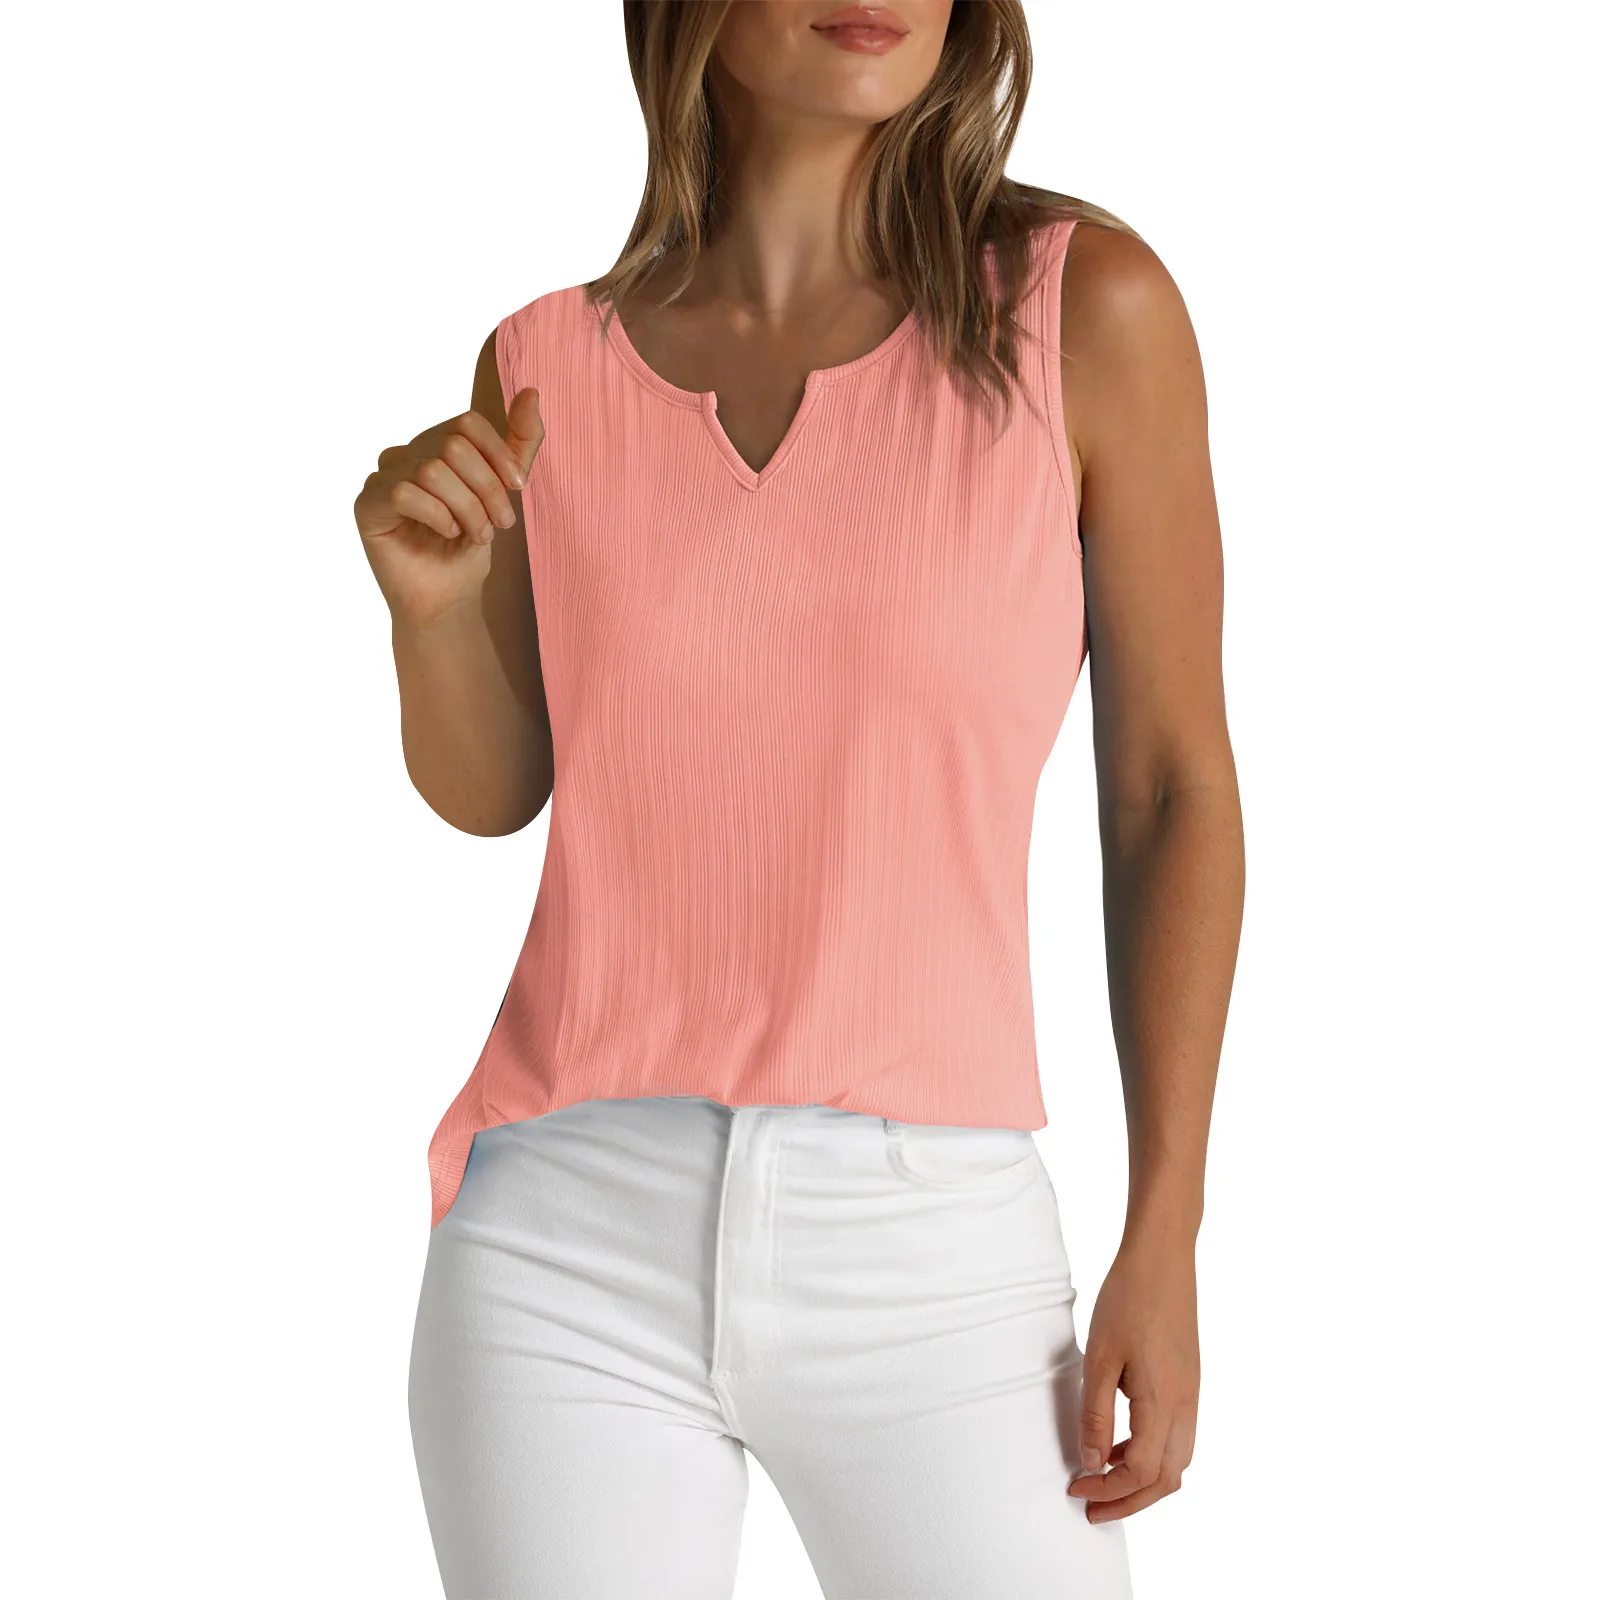 

Women's Sleeveless Knitted Vest, Sports Yoga Round Neck Top plus size oberteile tops de talla grande футболка plus rozmiar topy